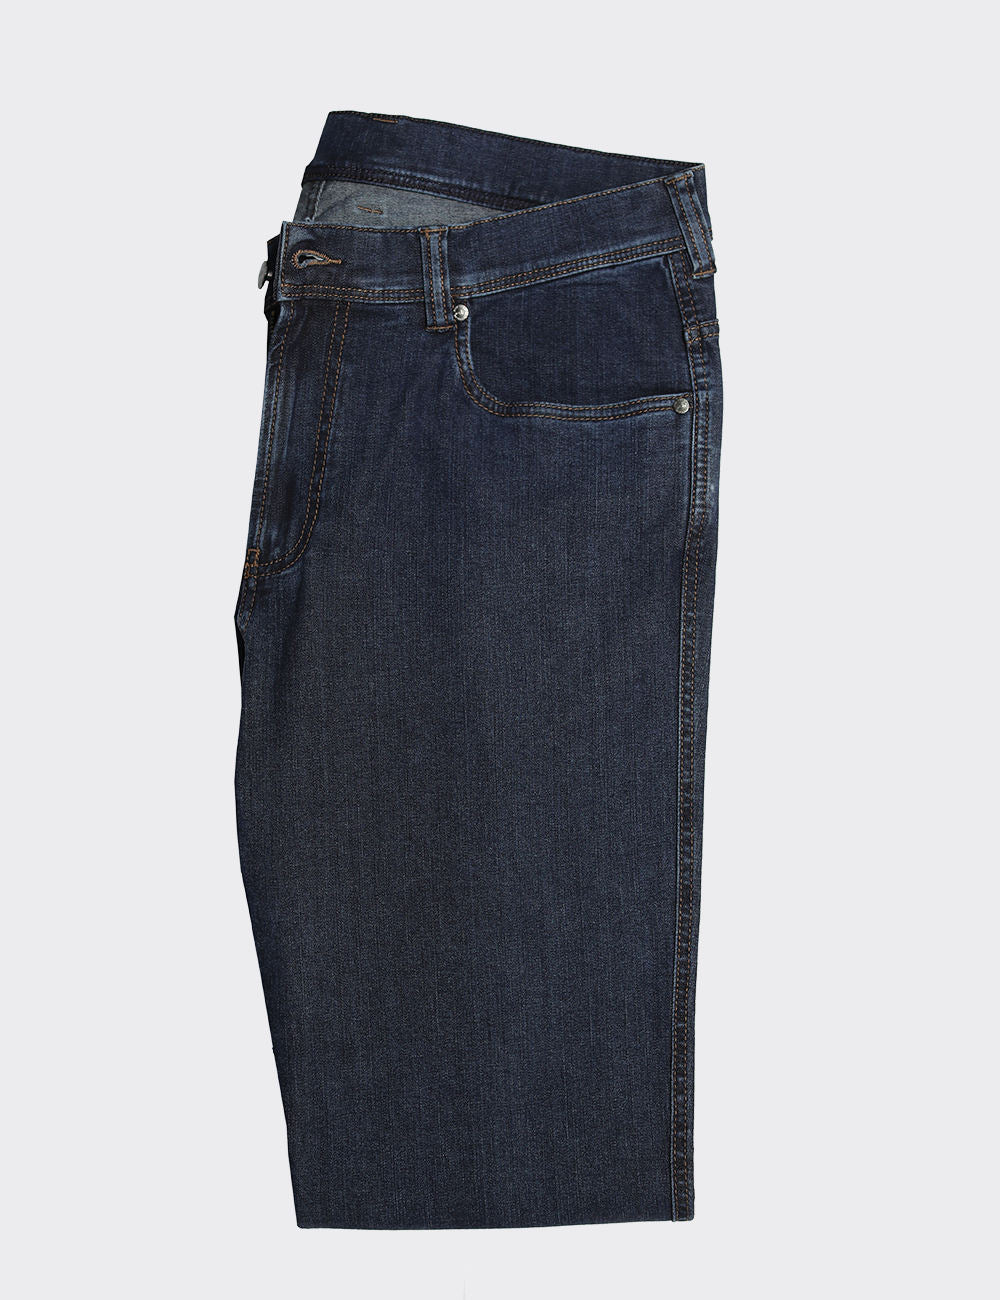 Bruhl blue denims pants for men